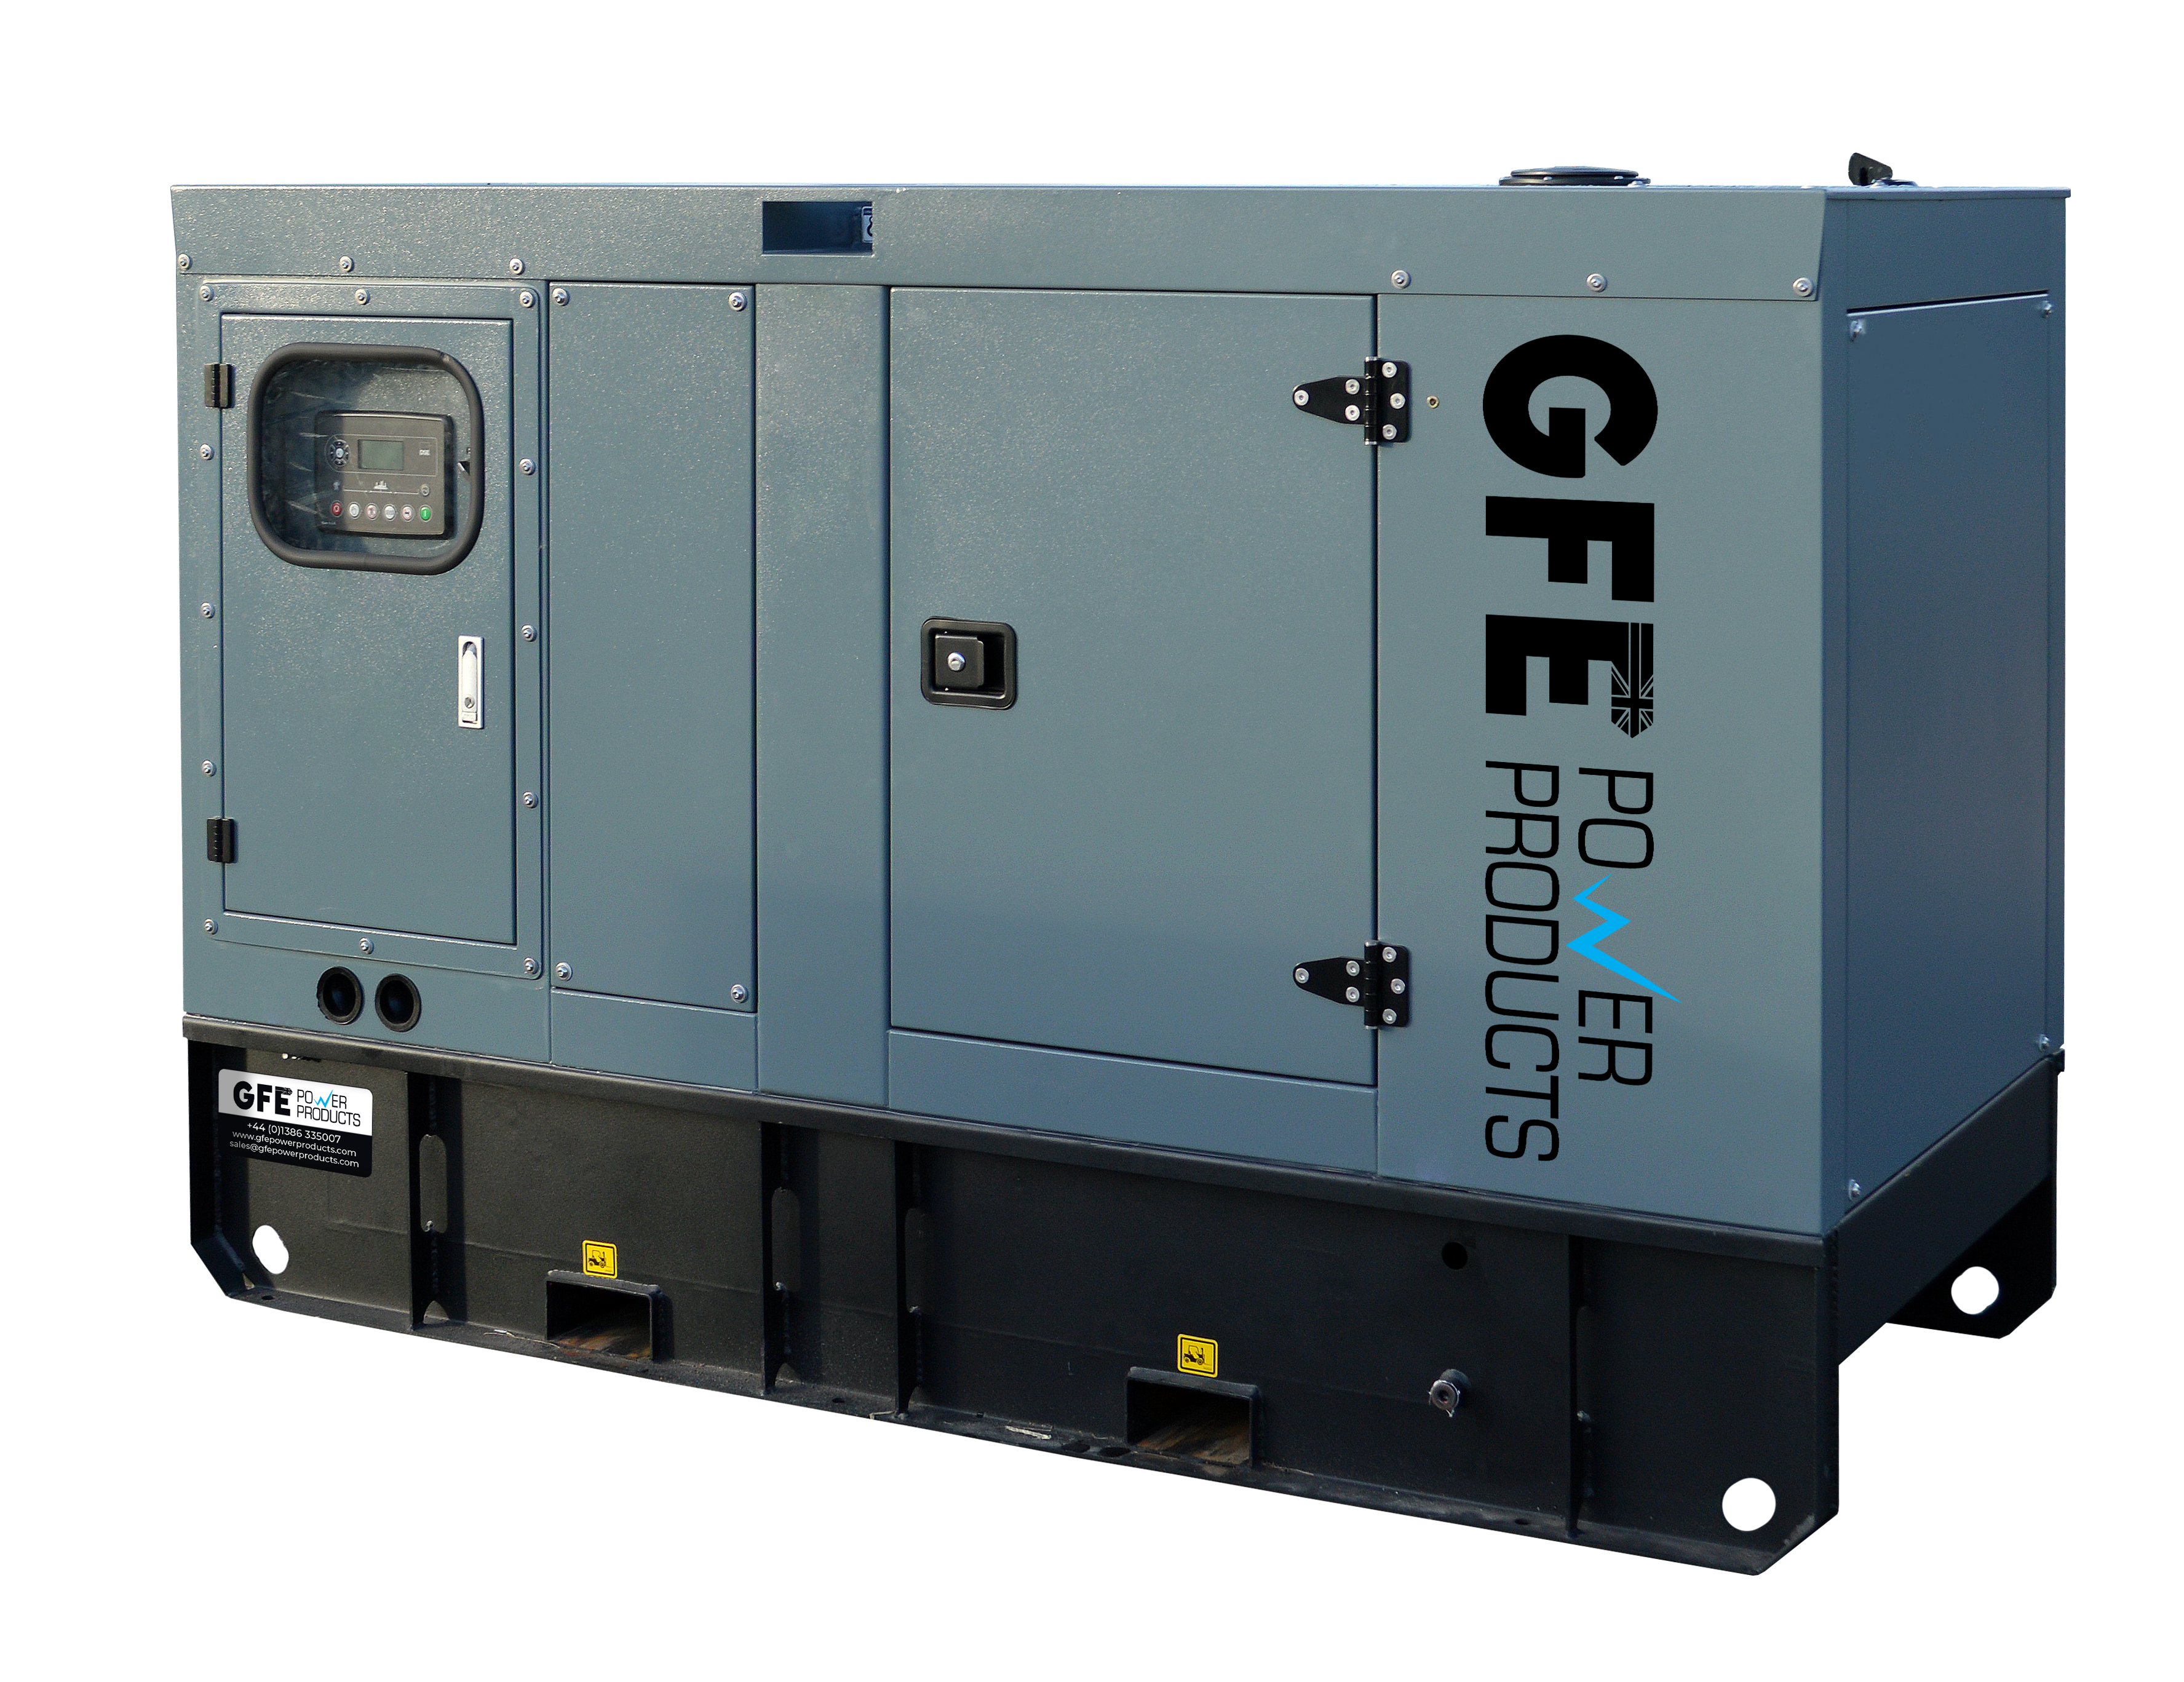 Cummins 50kVA Diesel Generator - GFE55CSC